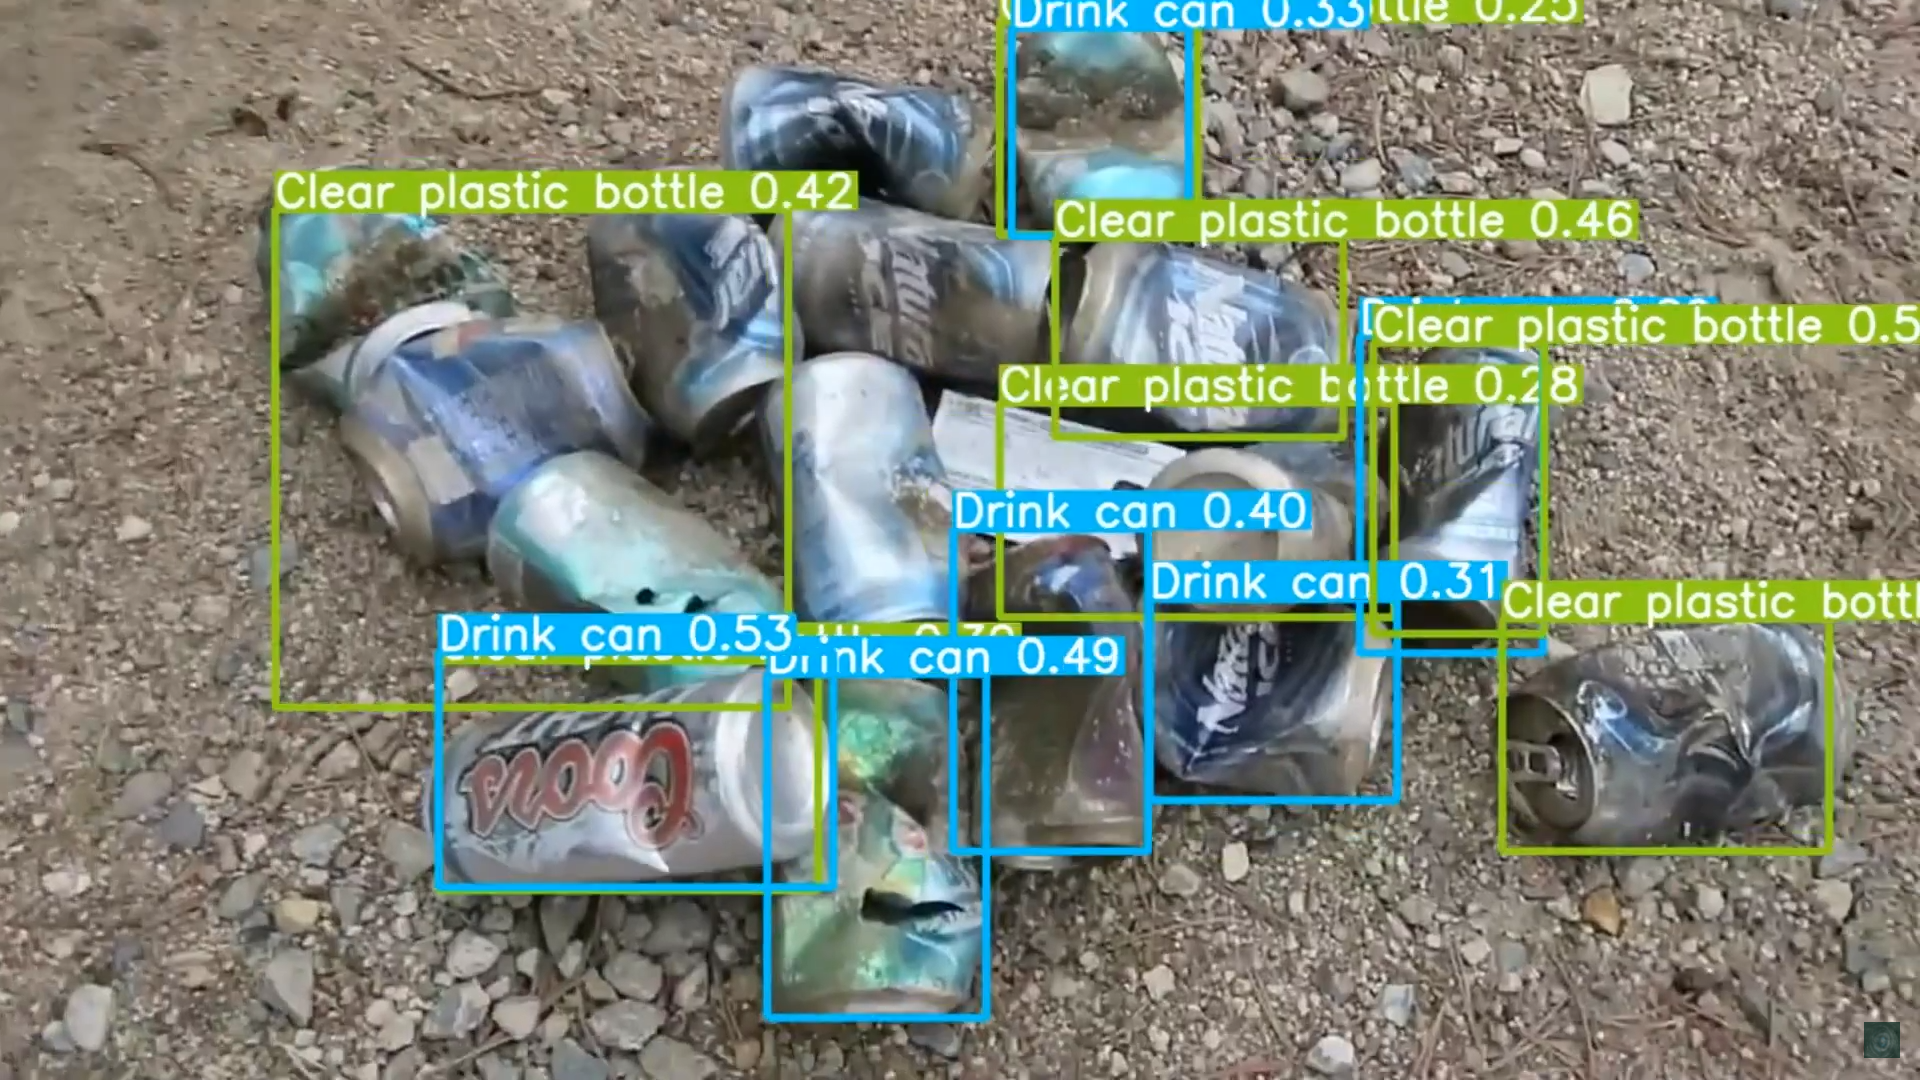 Plastic waste identification 👩‍🌾🧑‍🌾👨‍🌾